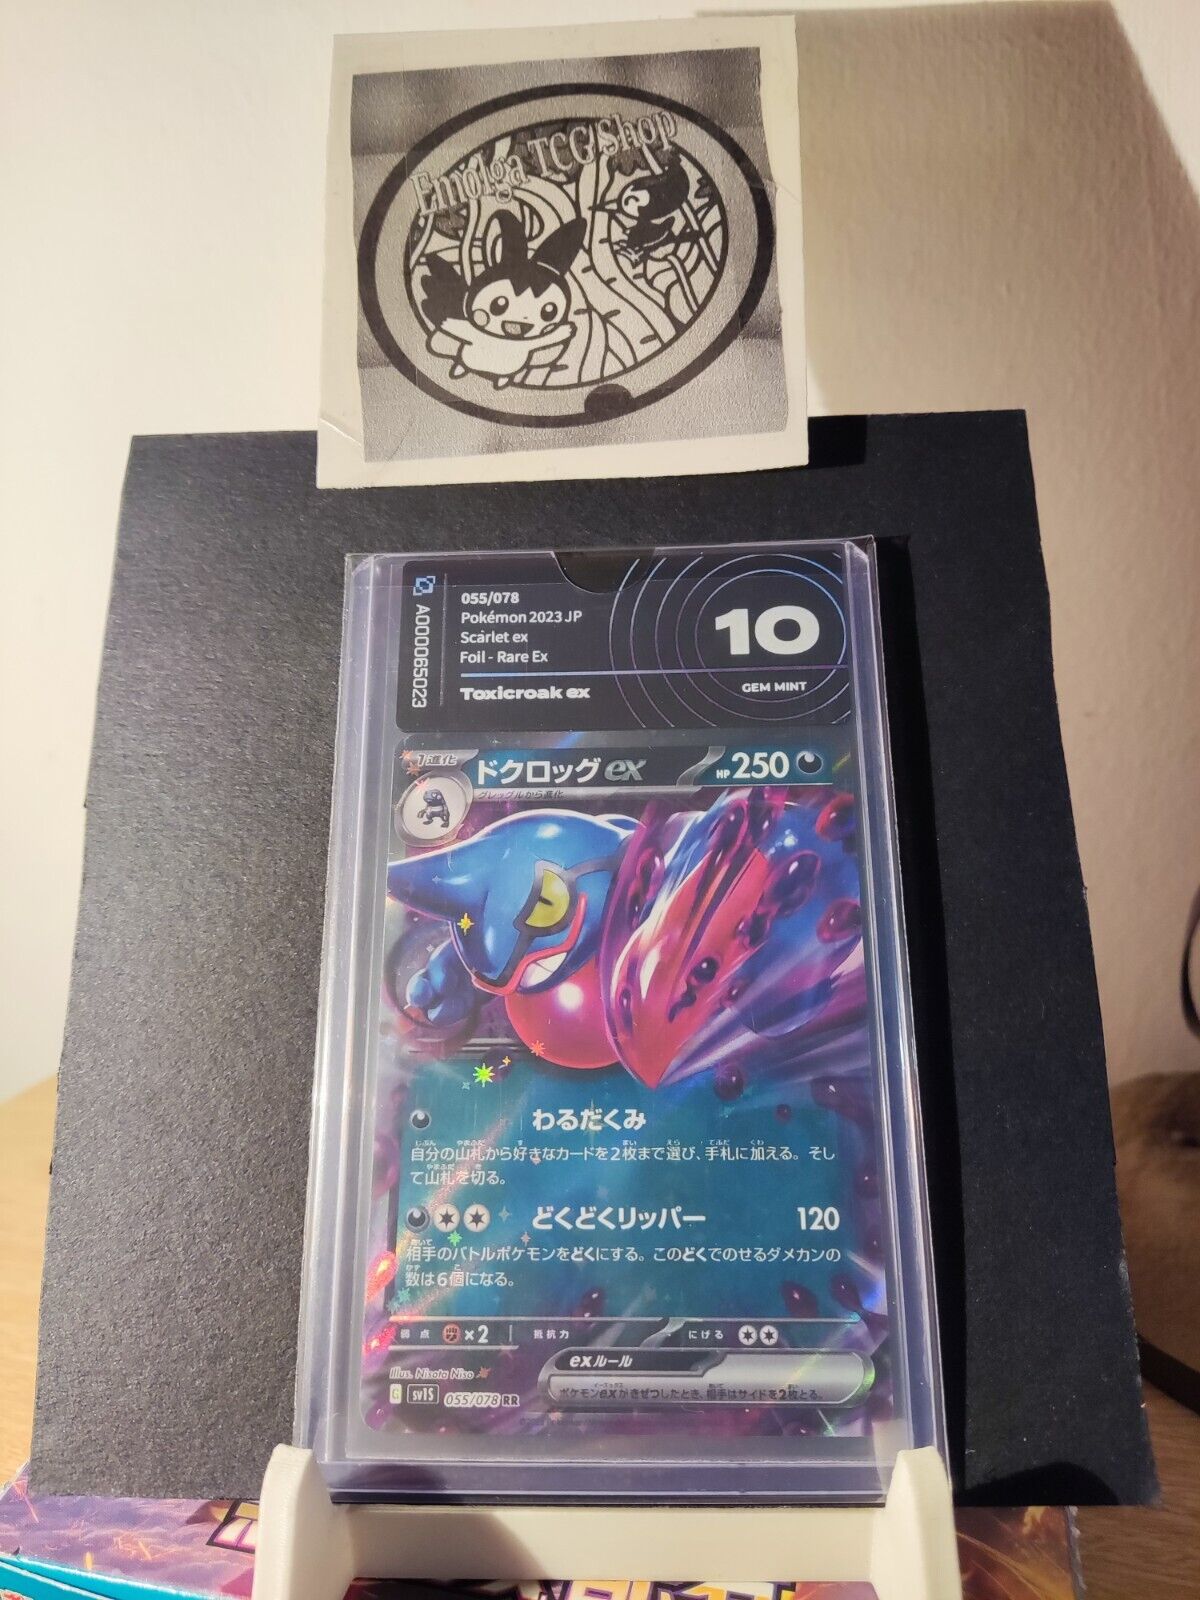 Toxicroak ex AiGrading 10 GEM MINT 55/78 RR Scarlet ex Pokemon Card Japanese